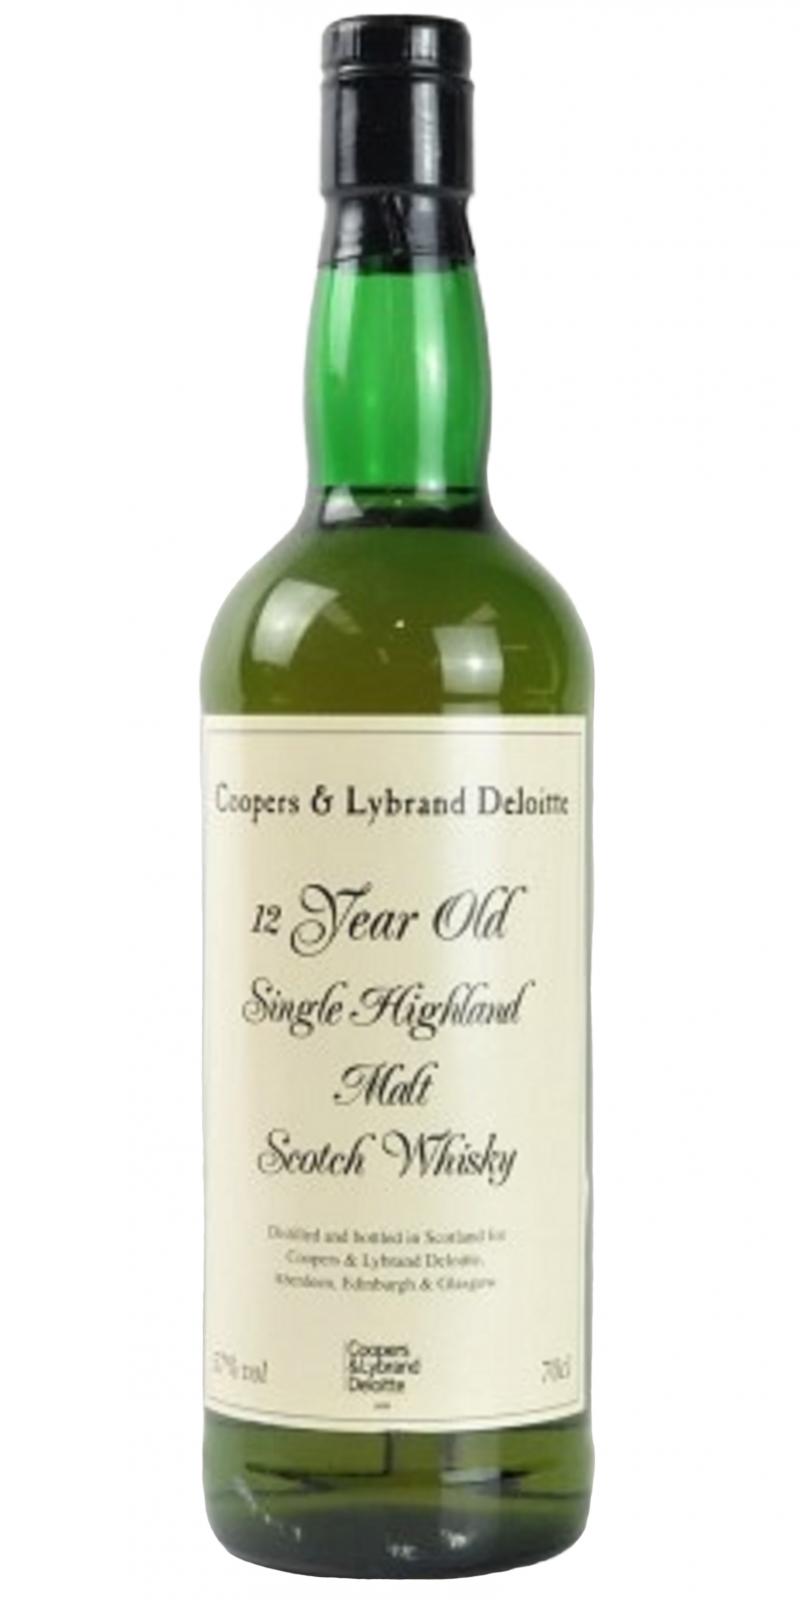 Coopers & Lybrand Deloitte 12yo UD Single Highland Malt Scotch Whisky 57% 700ml